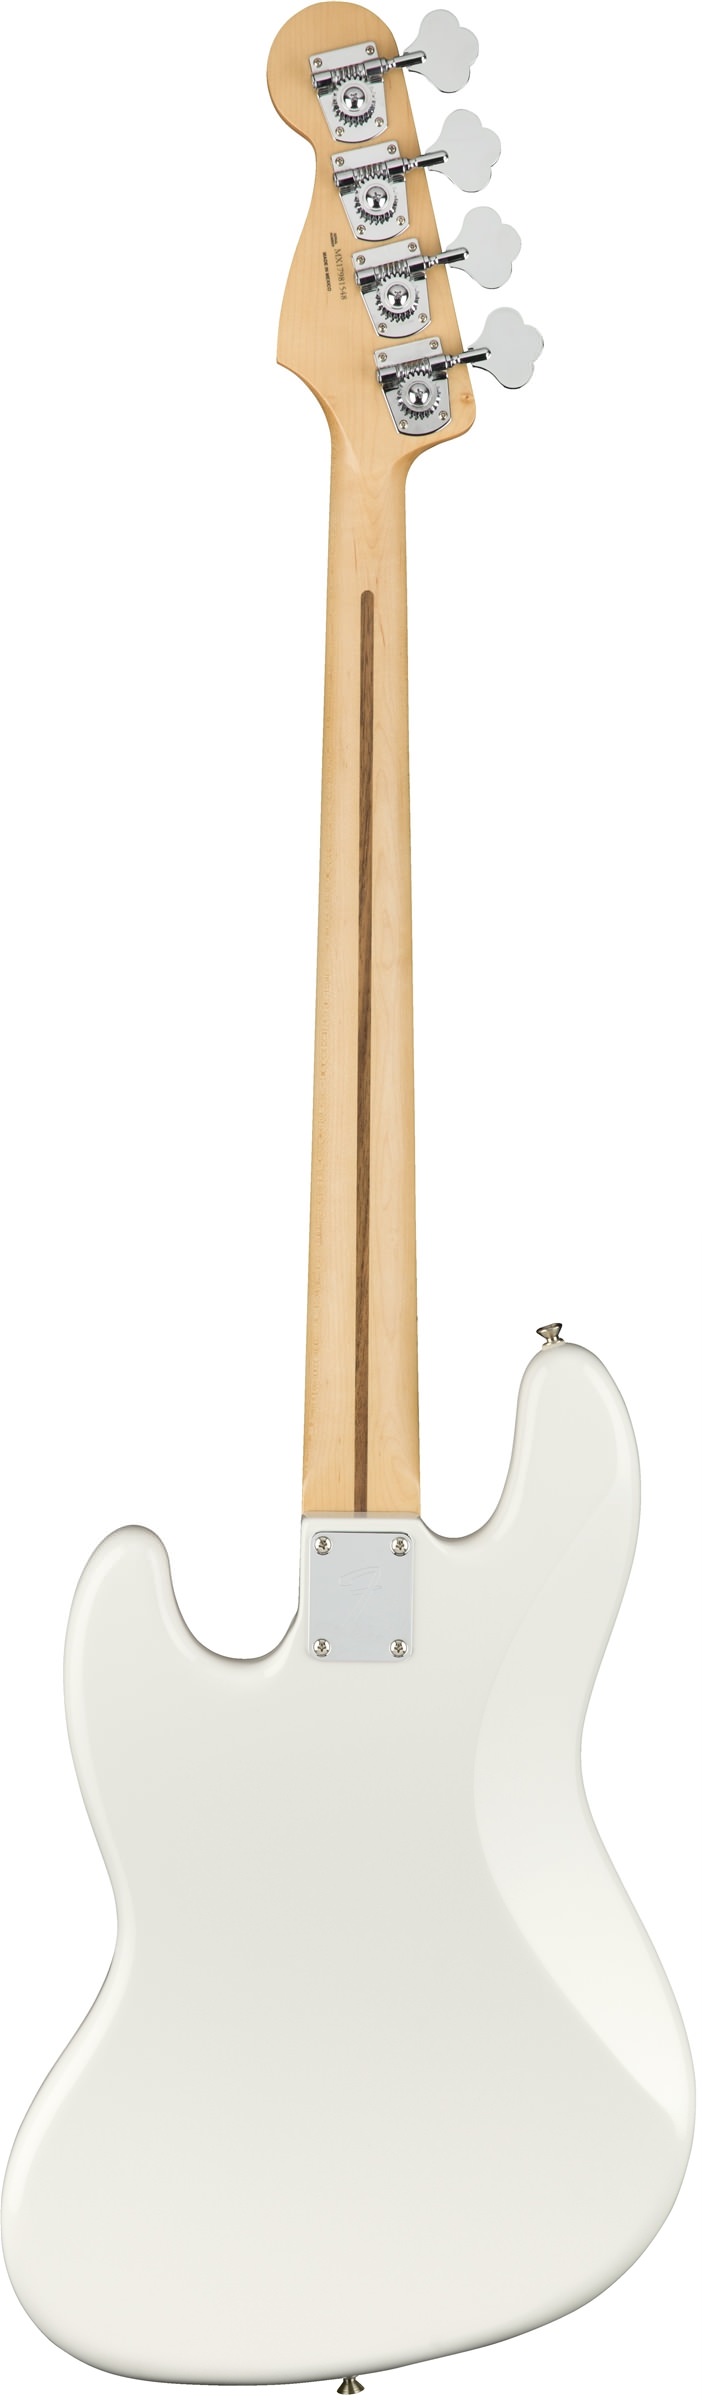 FENDER PLAYER Jazz Bass MN Polar White  4-струнная бас-гитара. купить в prostore.me